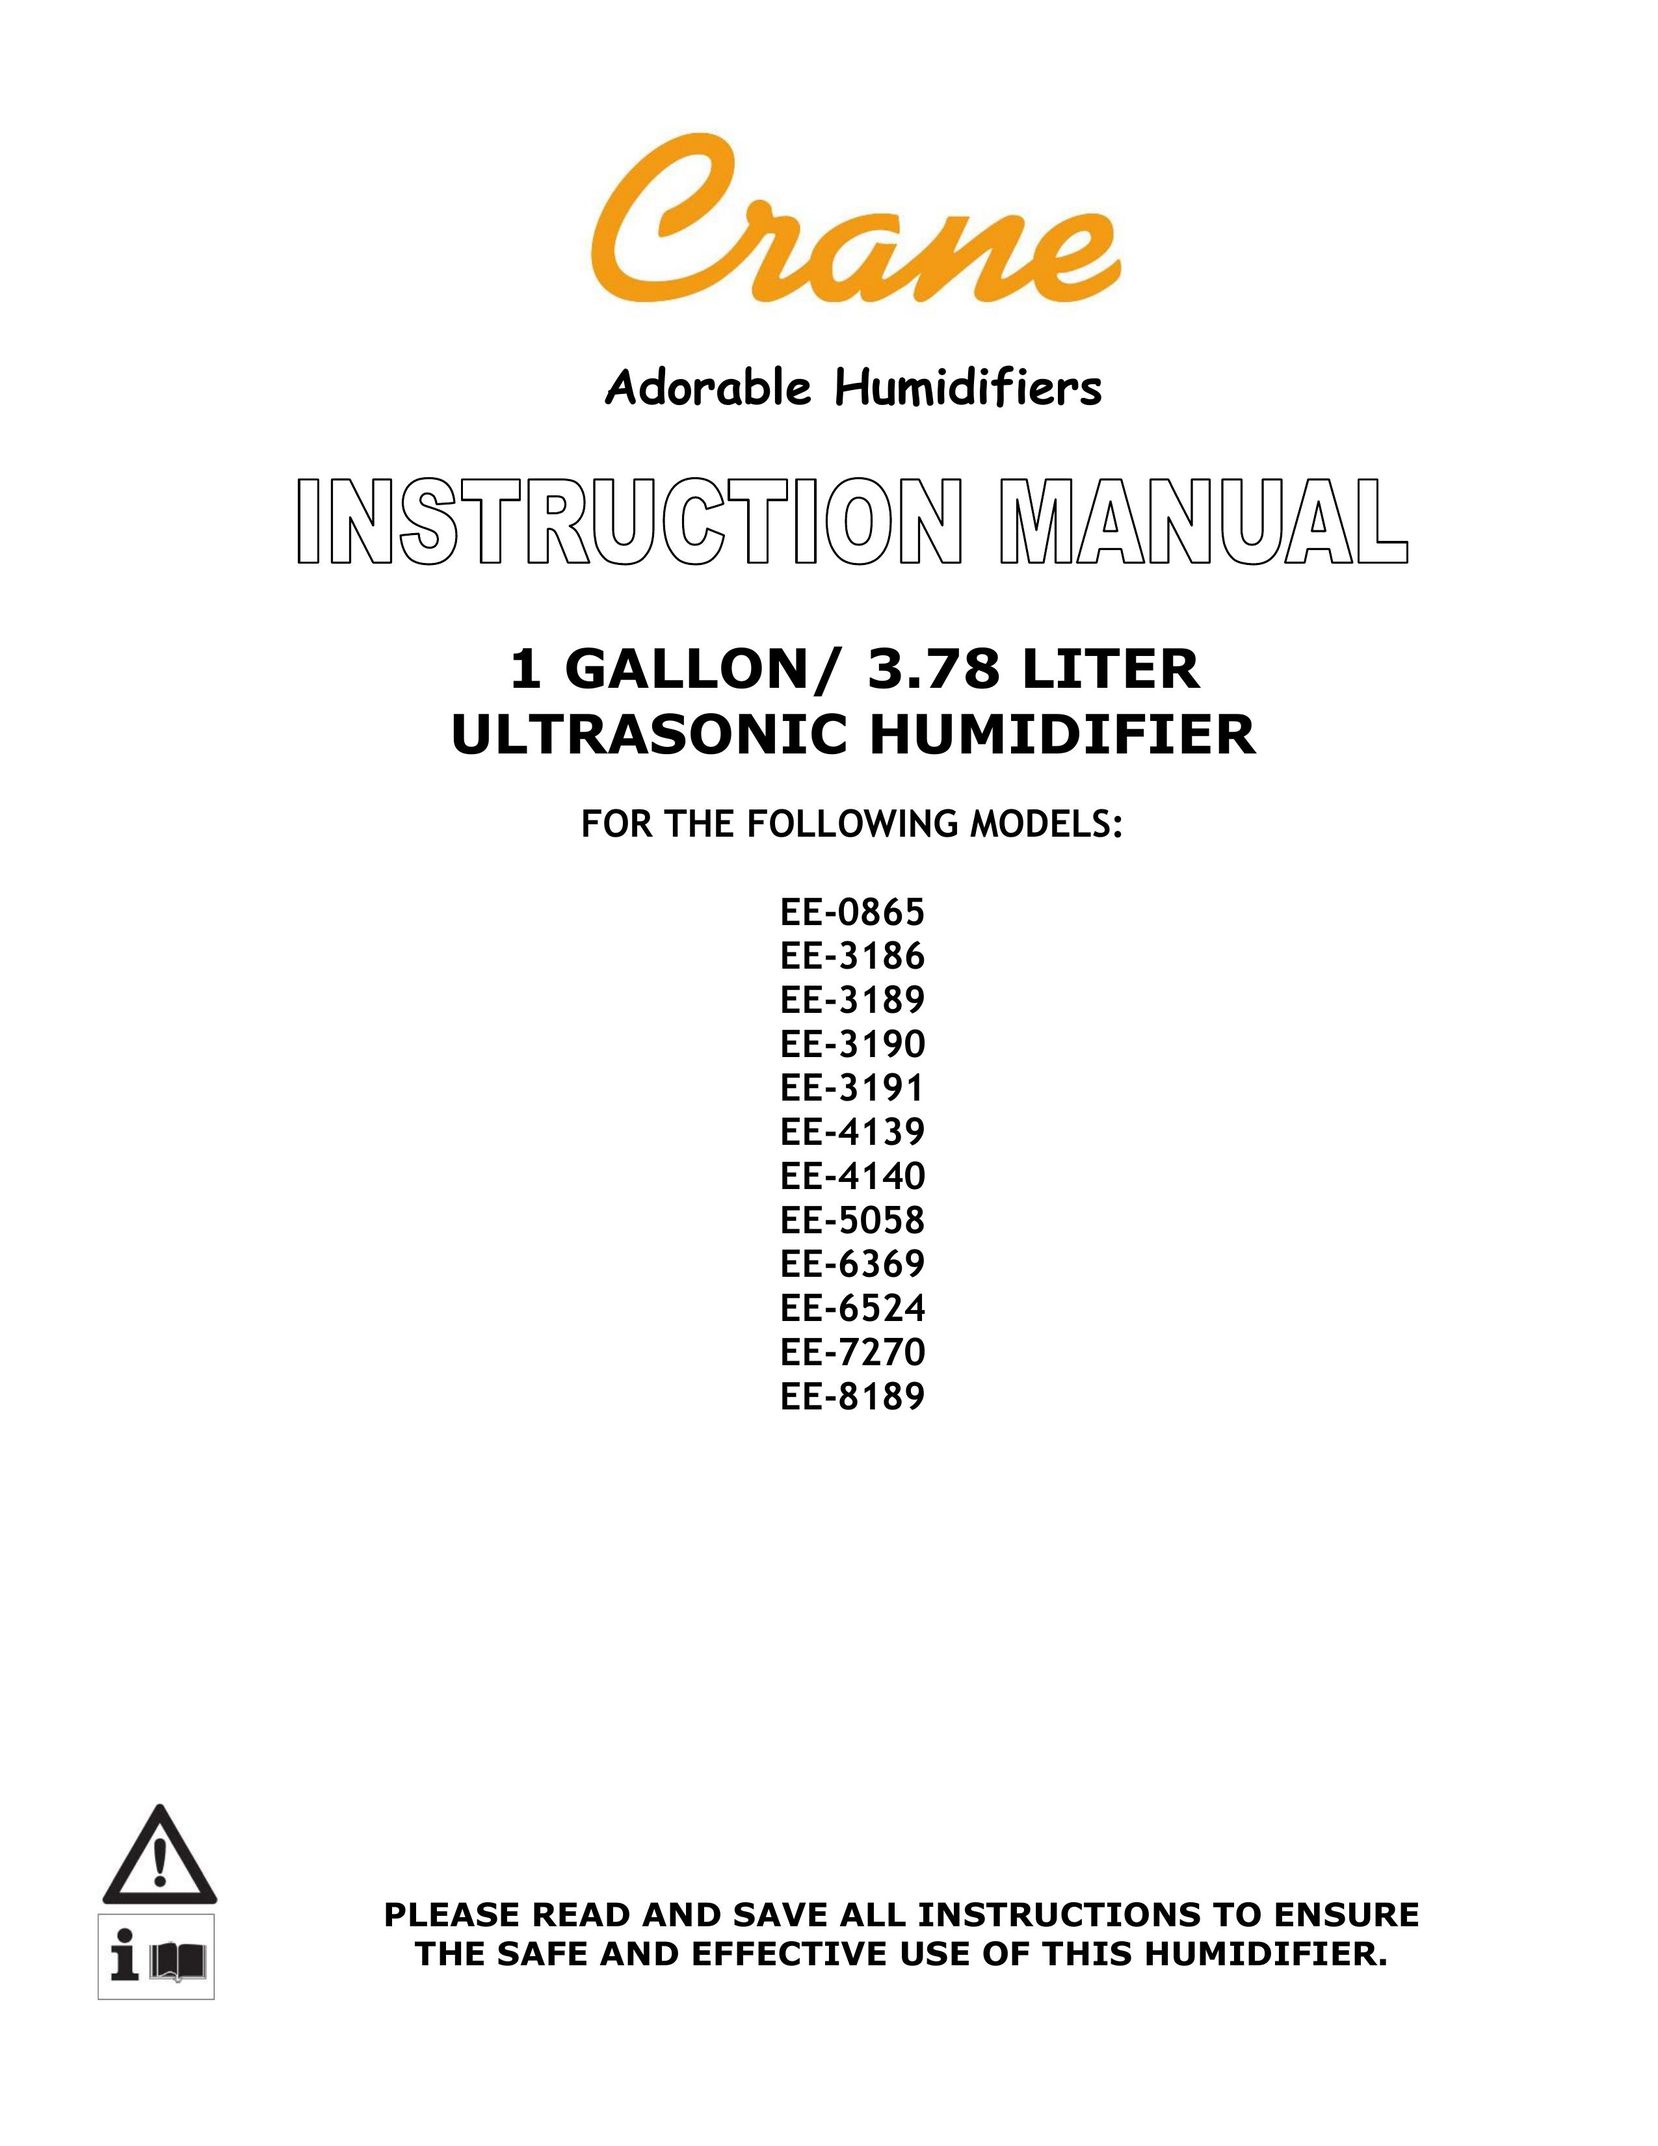 Crane EE-4140 Humidifier User Manual